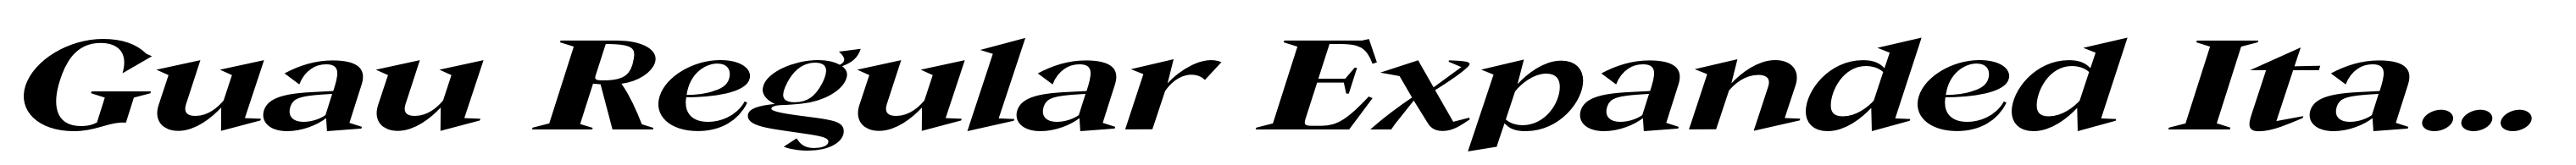 Guau Regular Expanded Italic